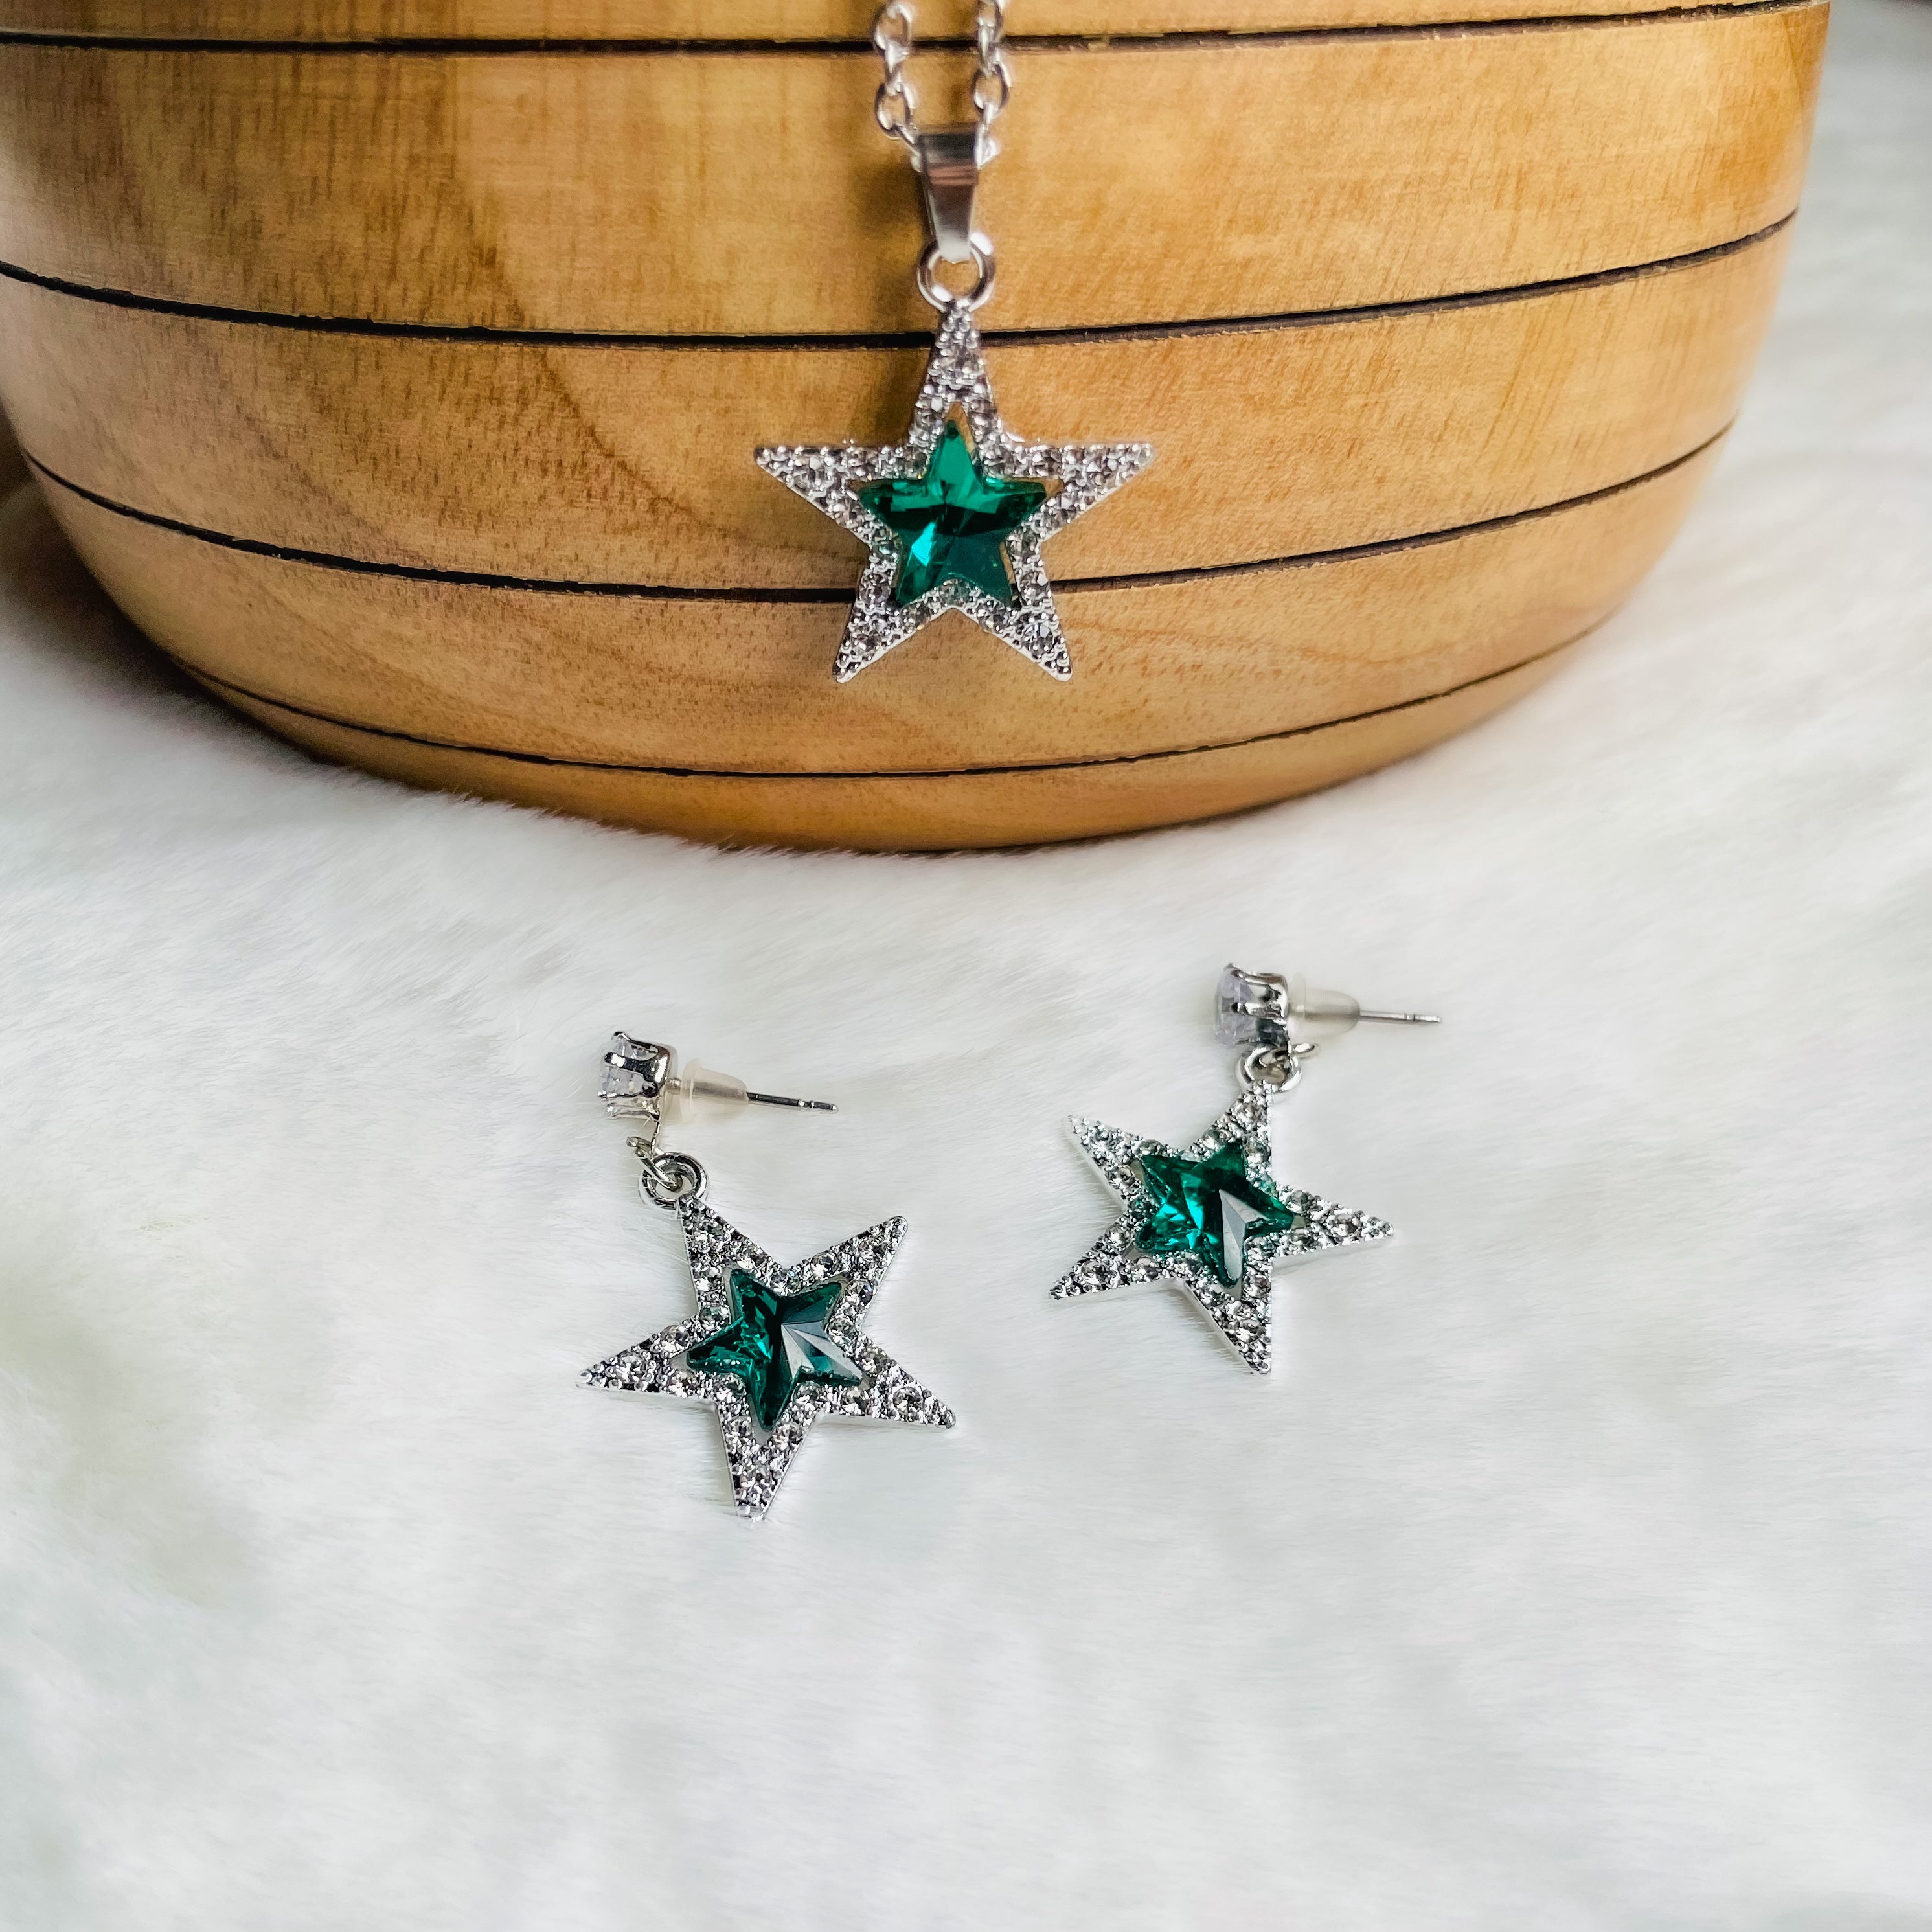 Shine Crystal Pendant Necklace Fashion Jewelry